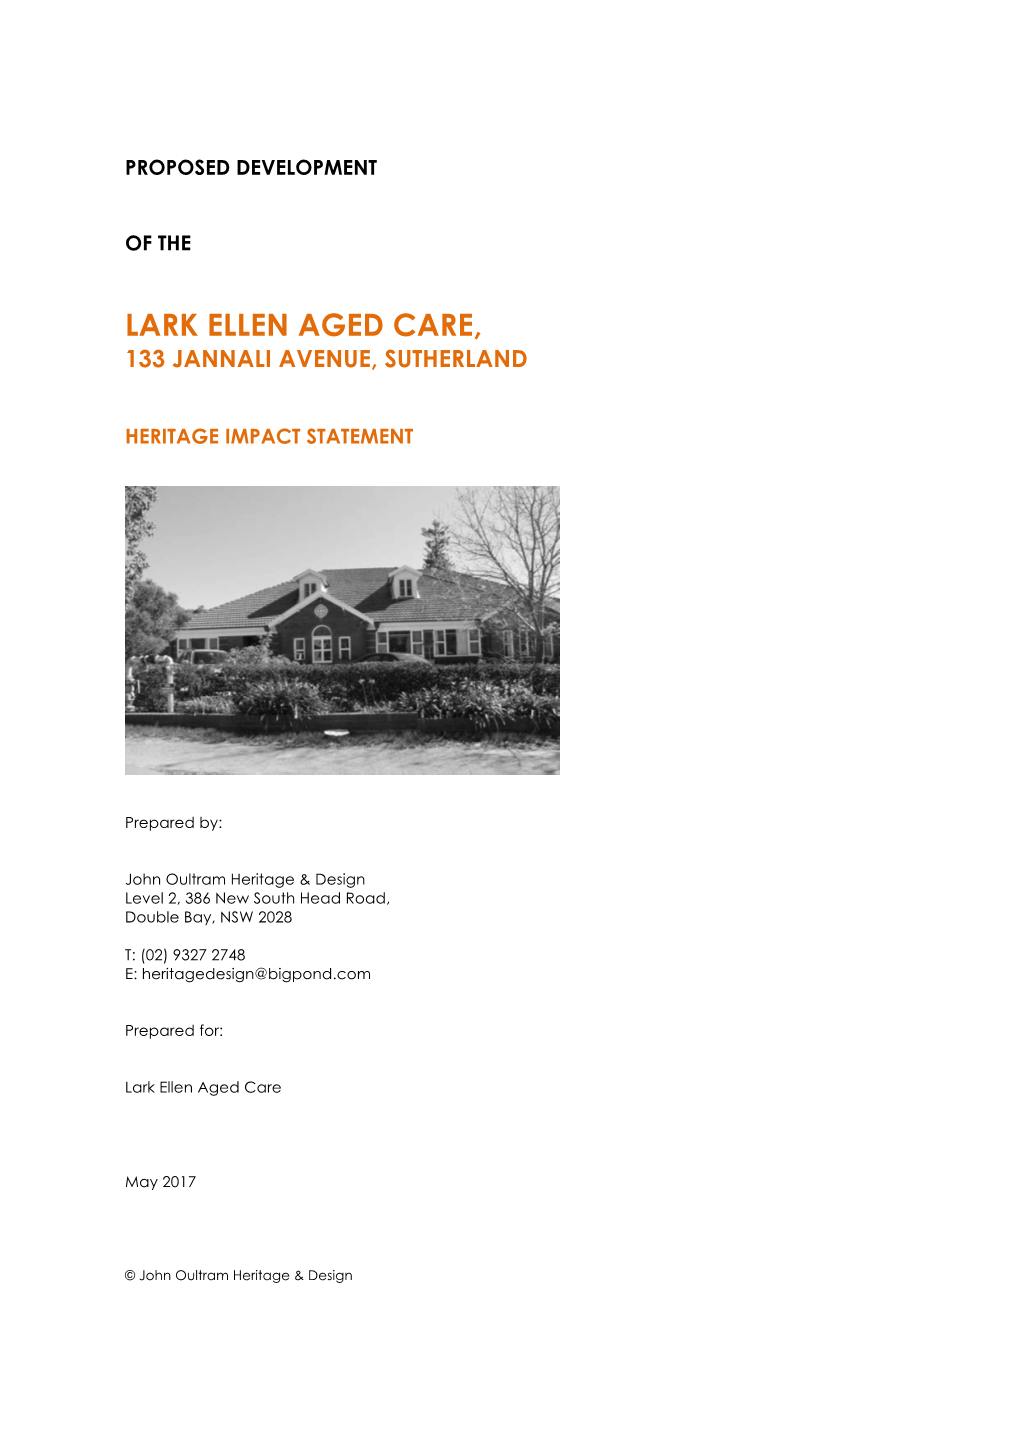 Lark Ellen Aged Care, 133 Jannali Avenue, Sutherland